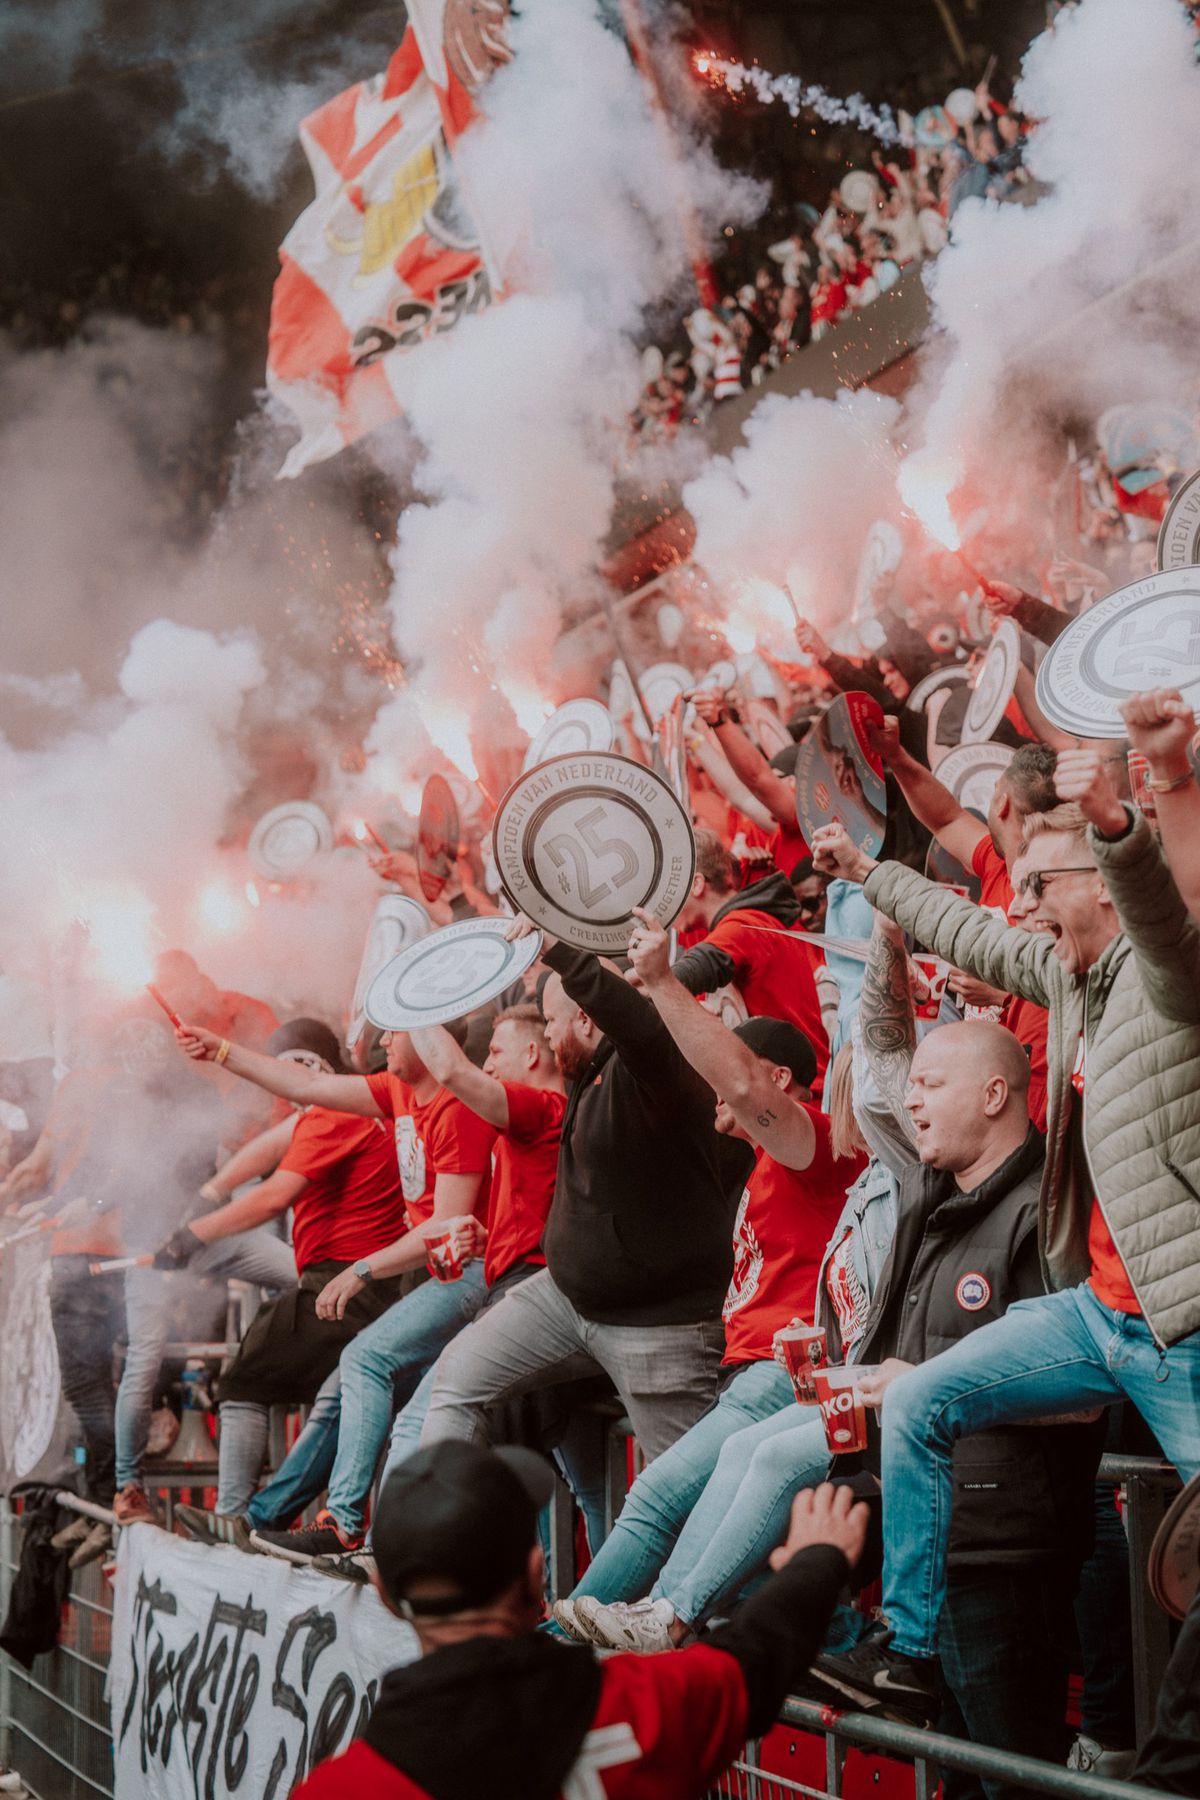 PSV Eindhoven - campioana